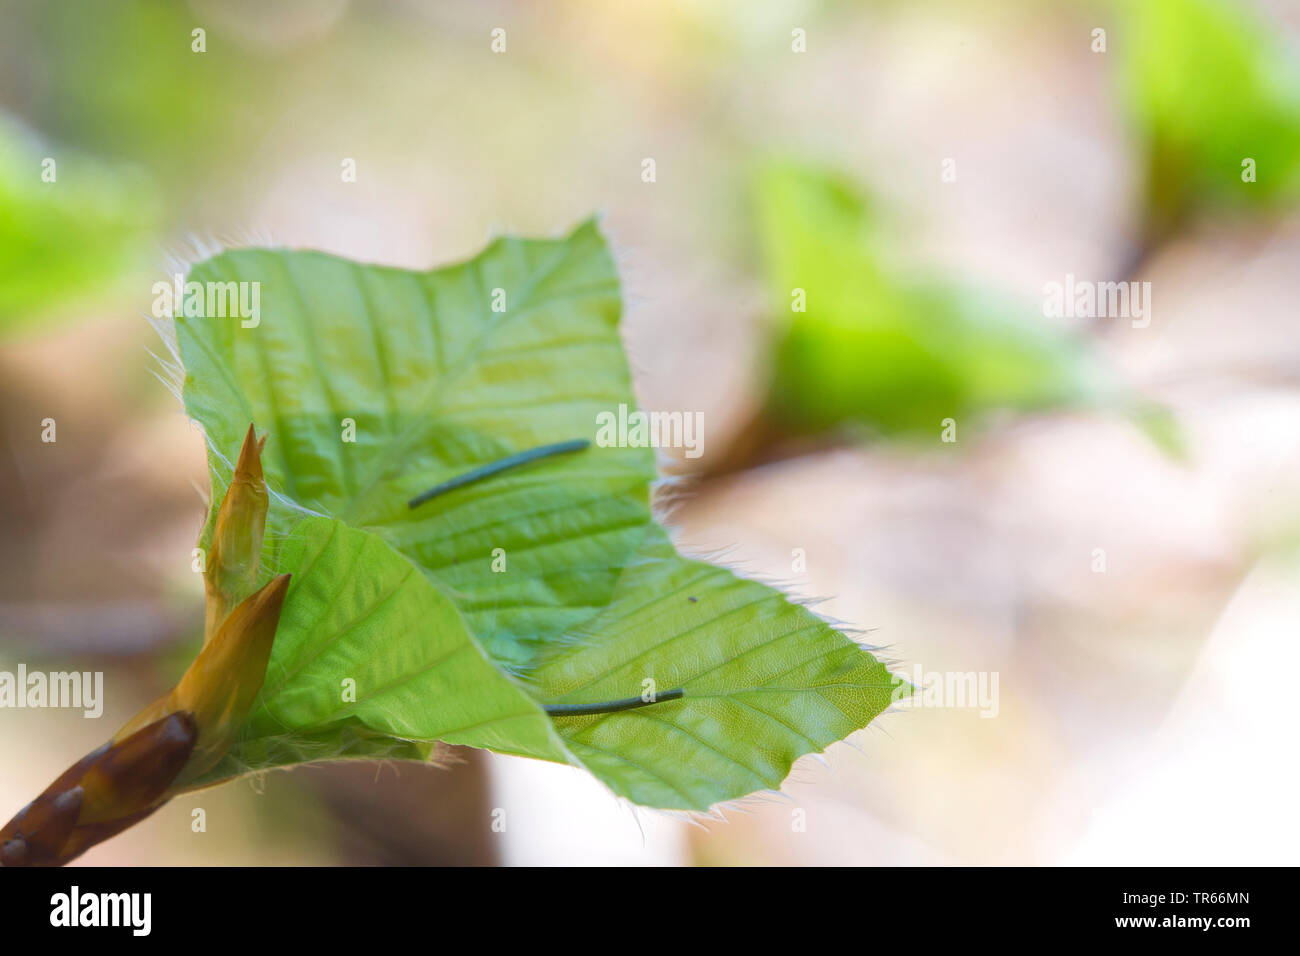 common beech (Fagus sylvatica), leaf shoots, Germany Stock Photo